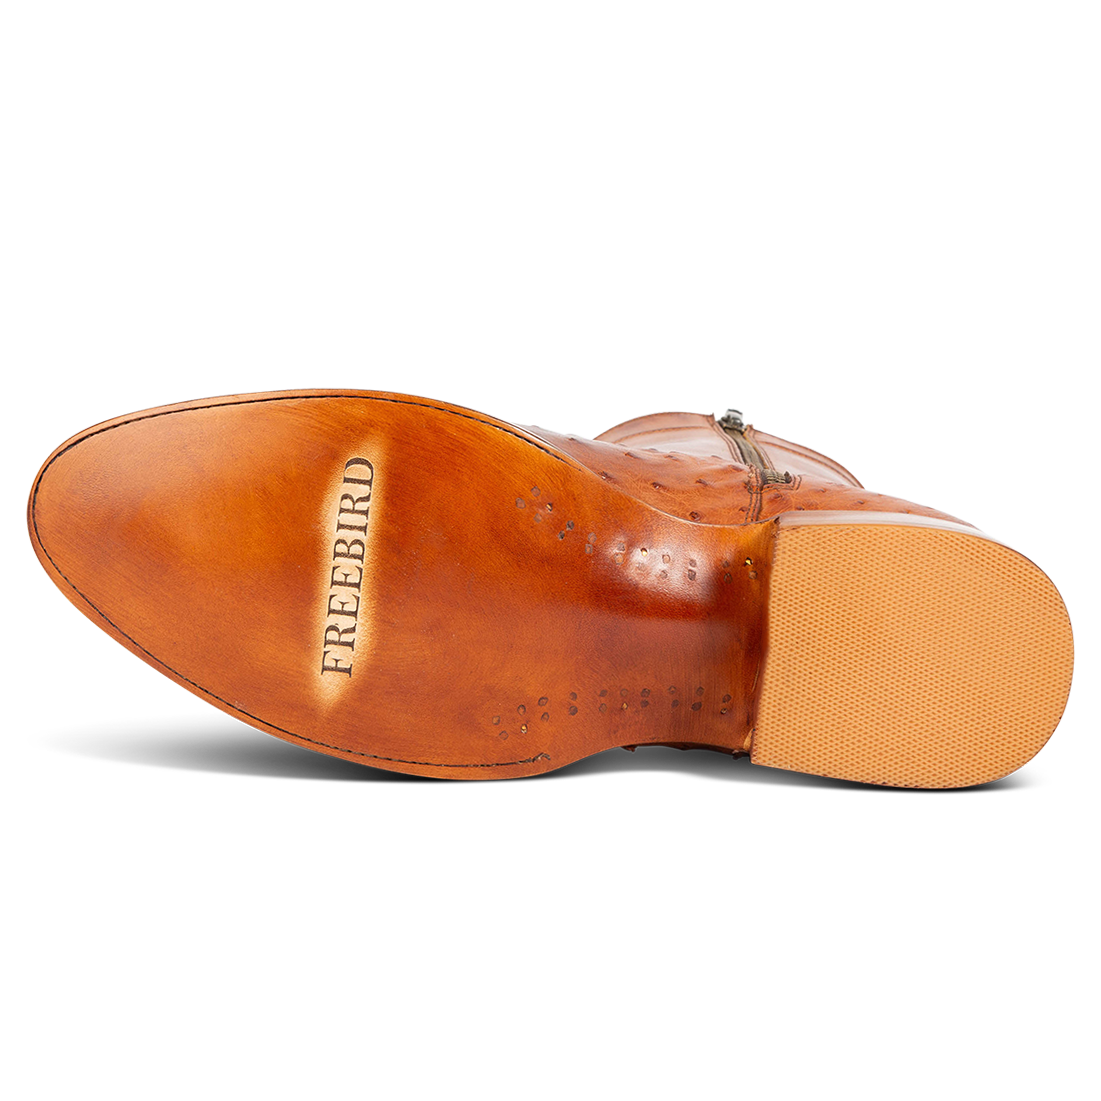 Leather imprinted sole FREEBIRD on men's Desperado tan mid calf boot